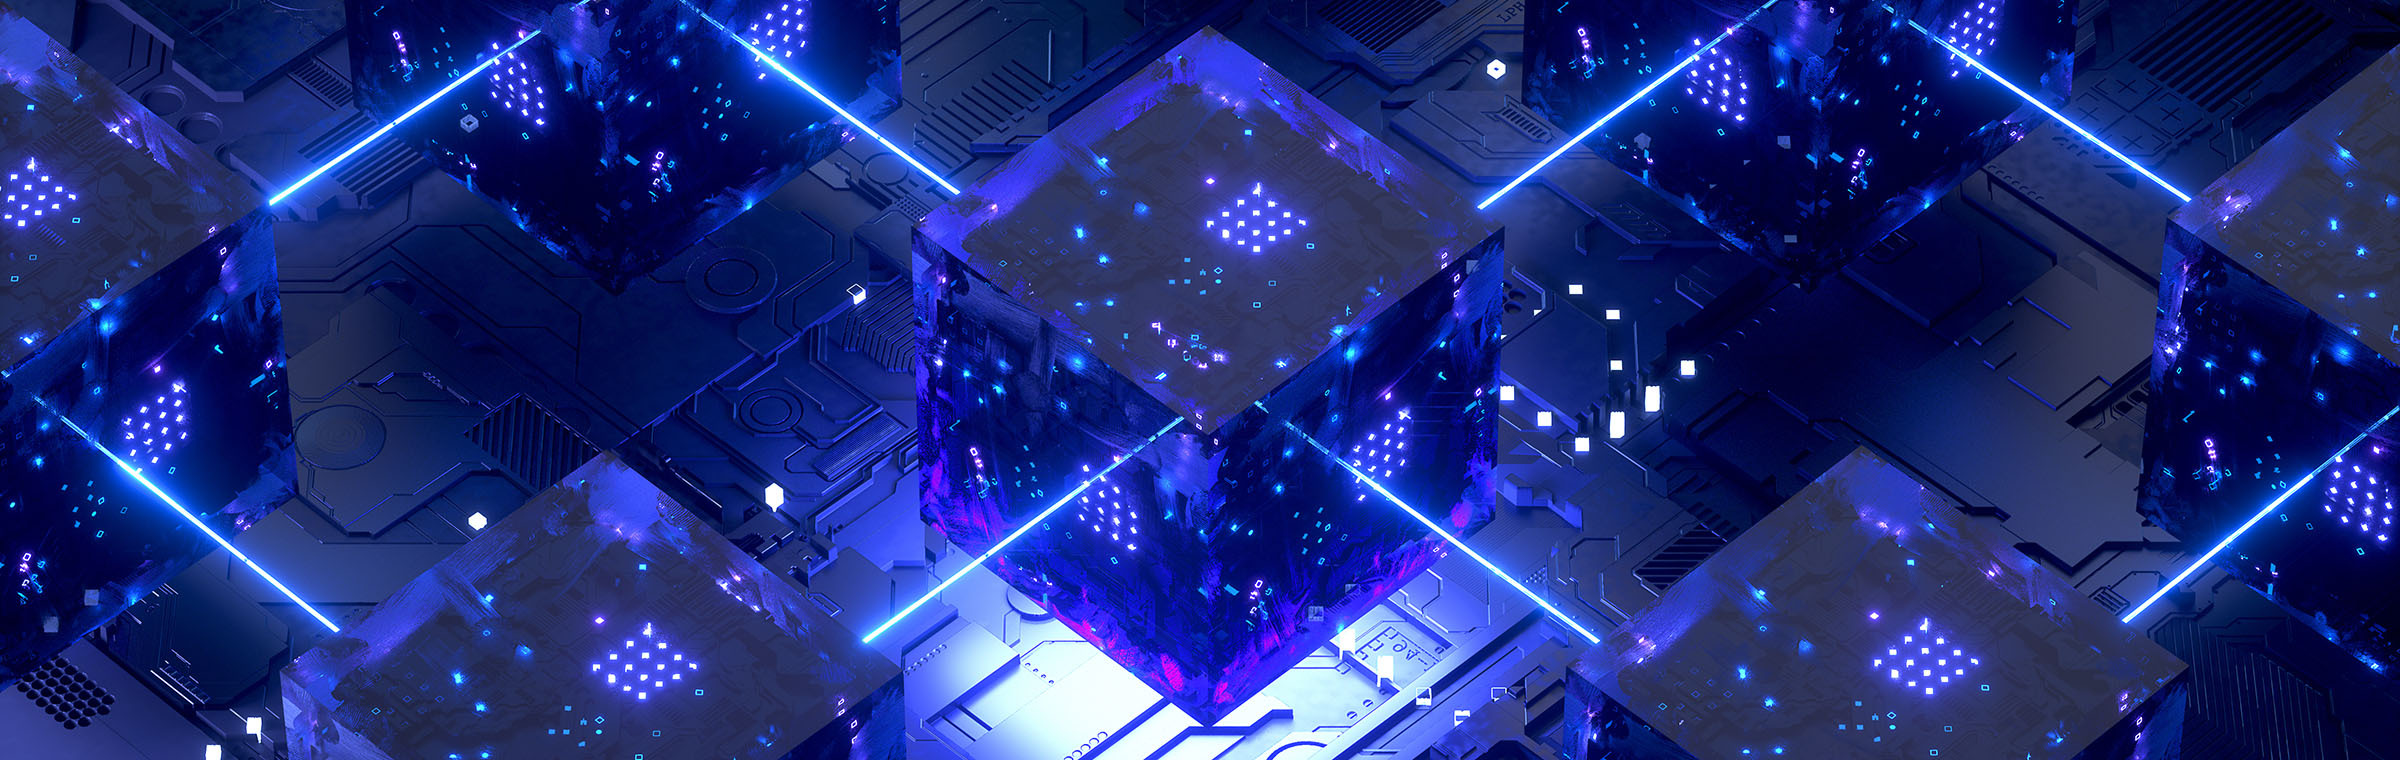 interconnected digital blocks representing the blockchain